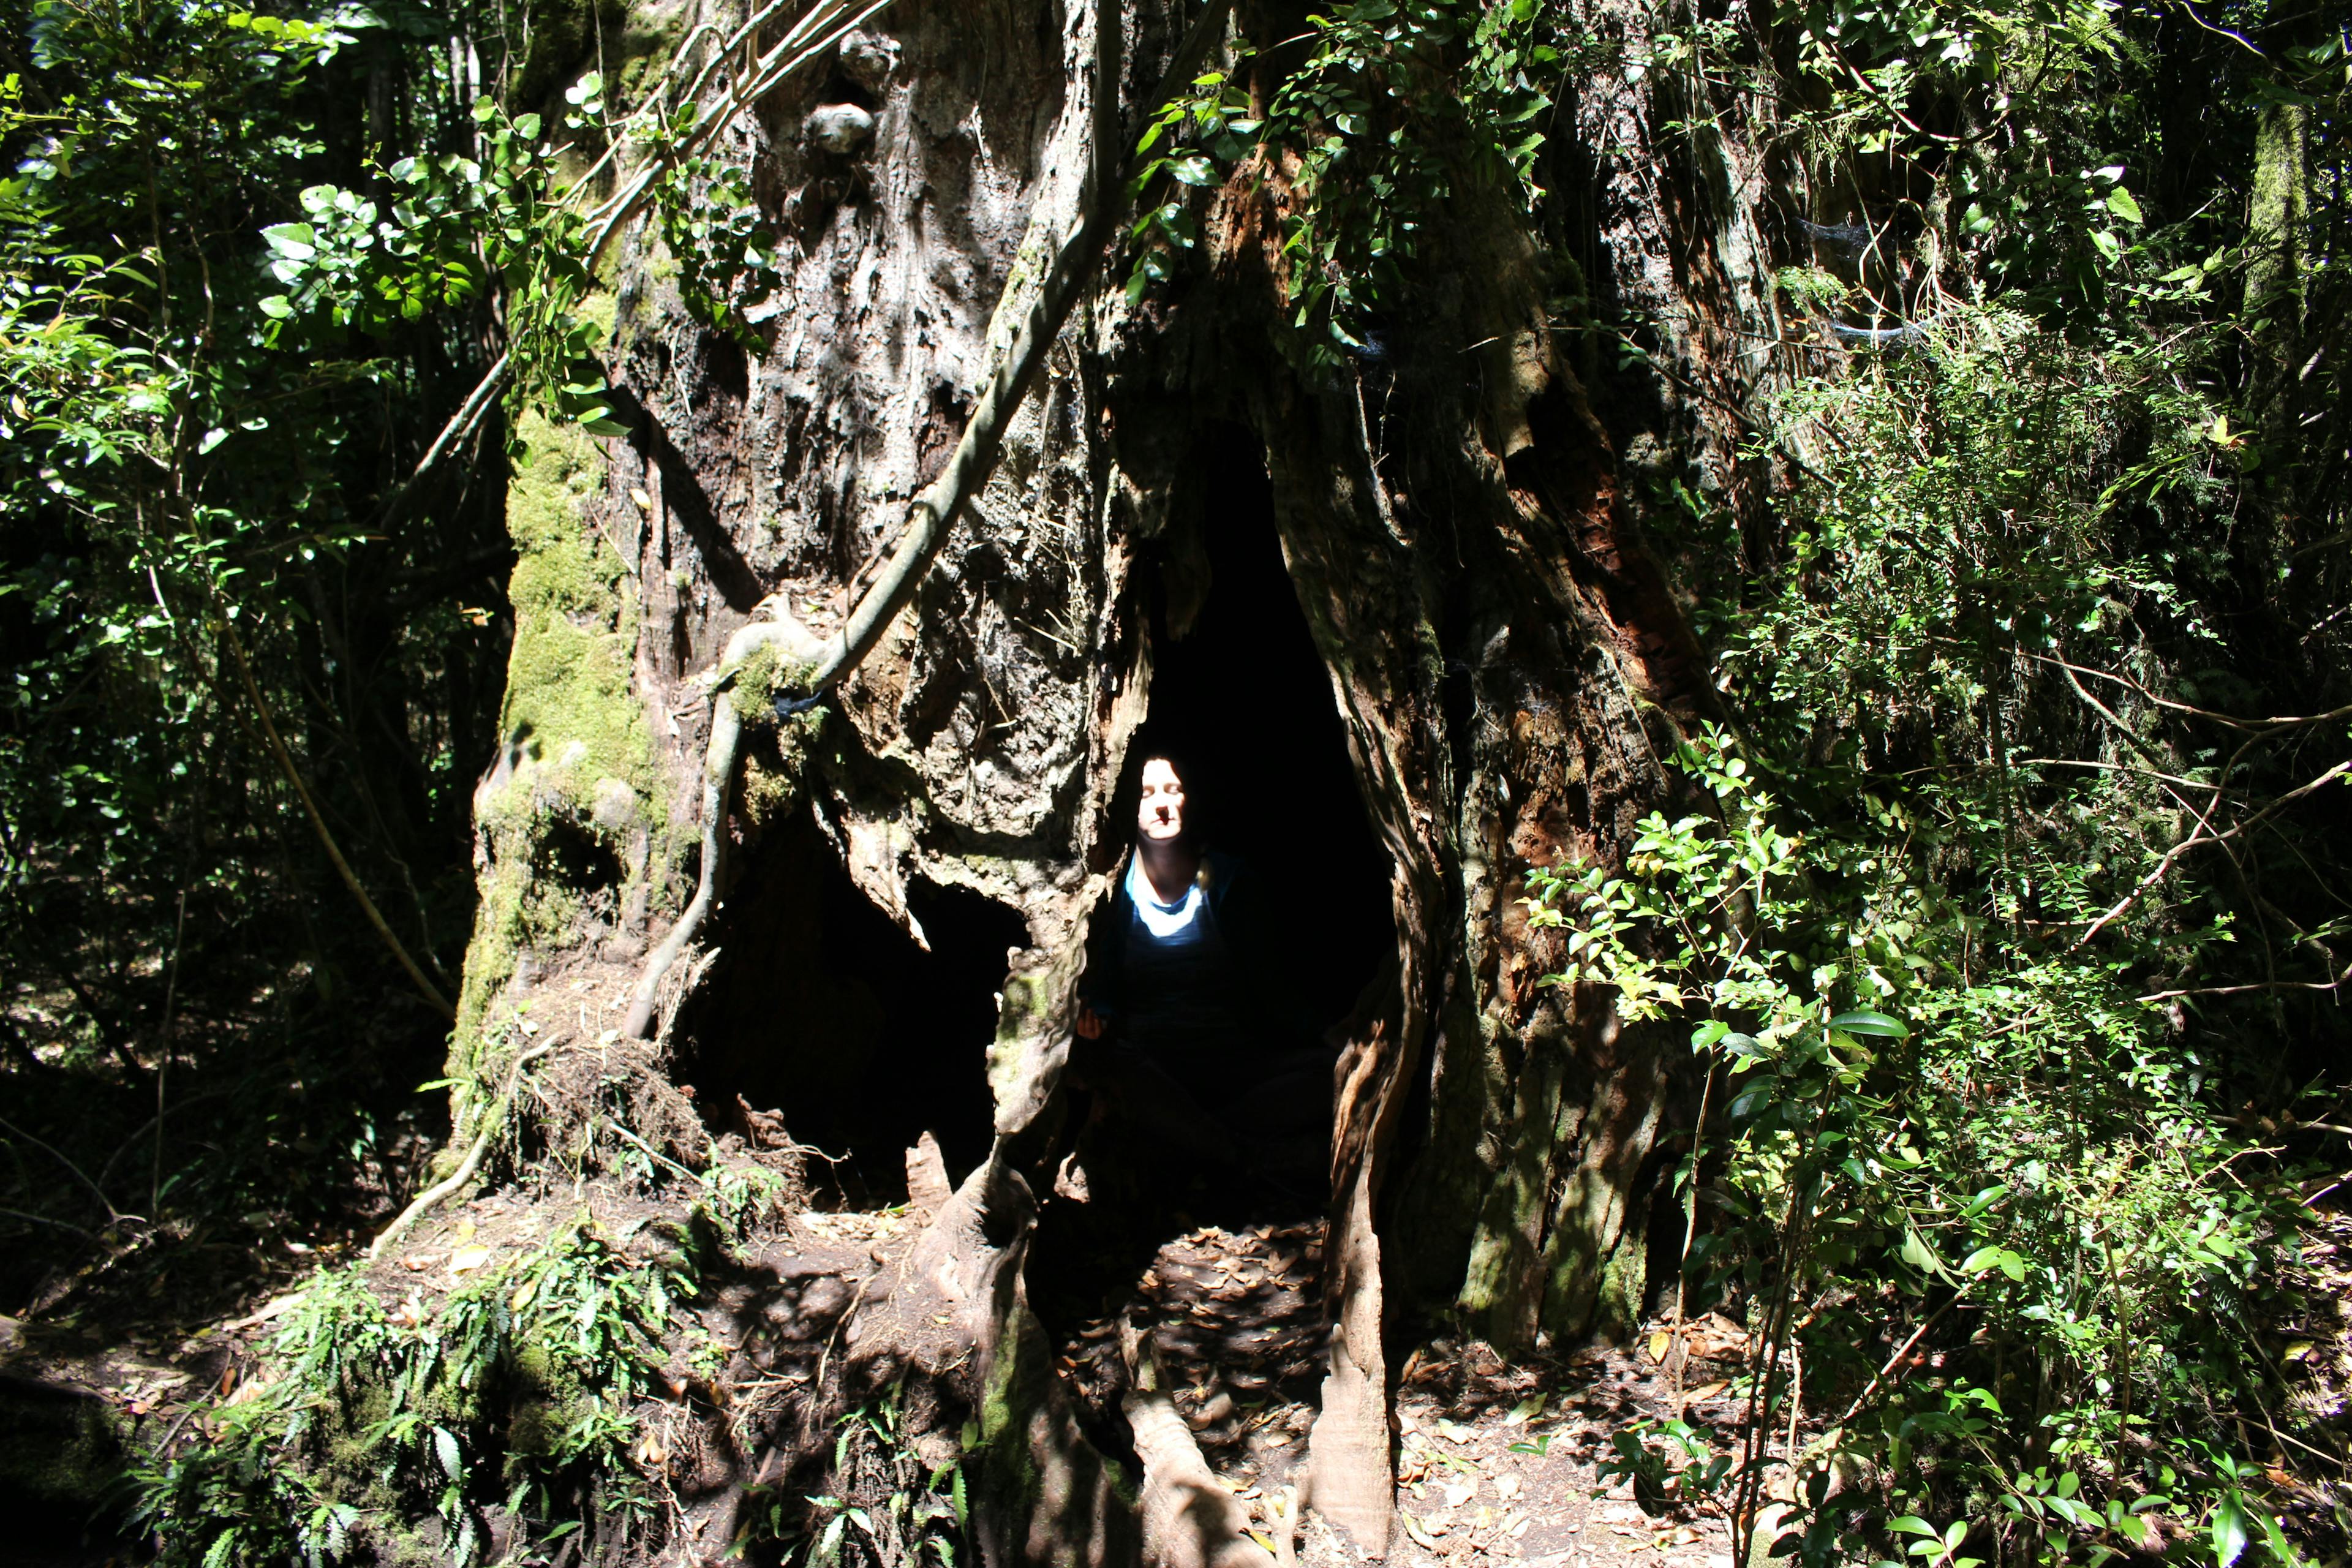 Lauren relaxing in a tree at Parque Nacional Puyehue